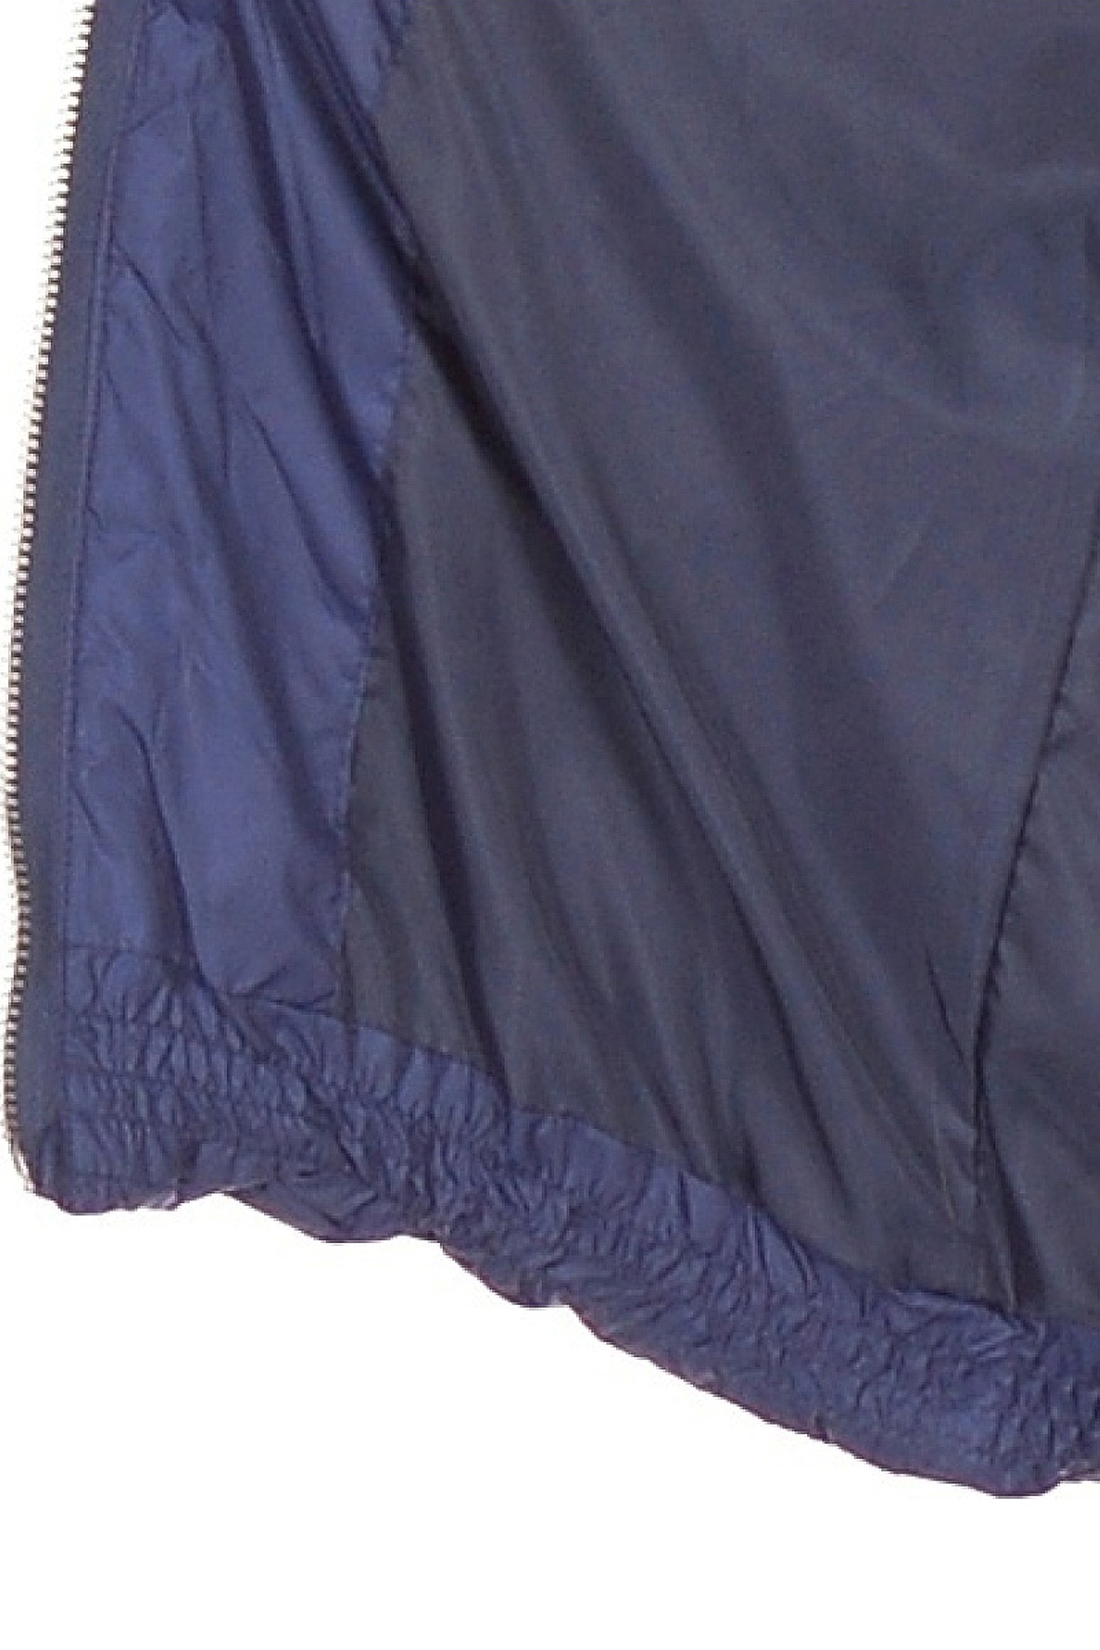 Куртка с простёжкой ромбами (арт. baon B038047), размер L, цвет синий Куртка с простёжкой ромбами (арт. baon B038047) - фото 3